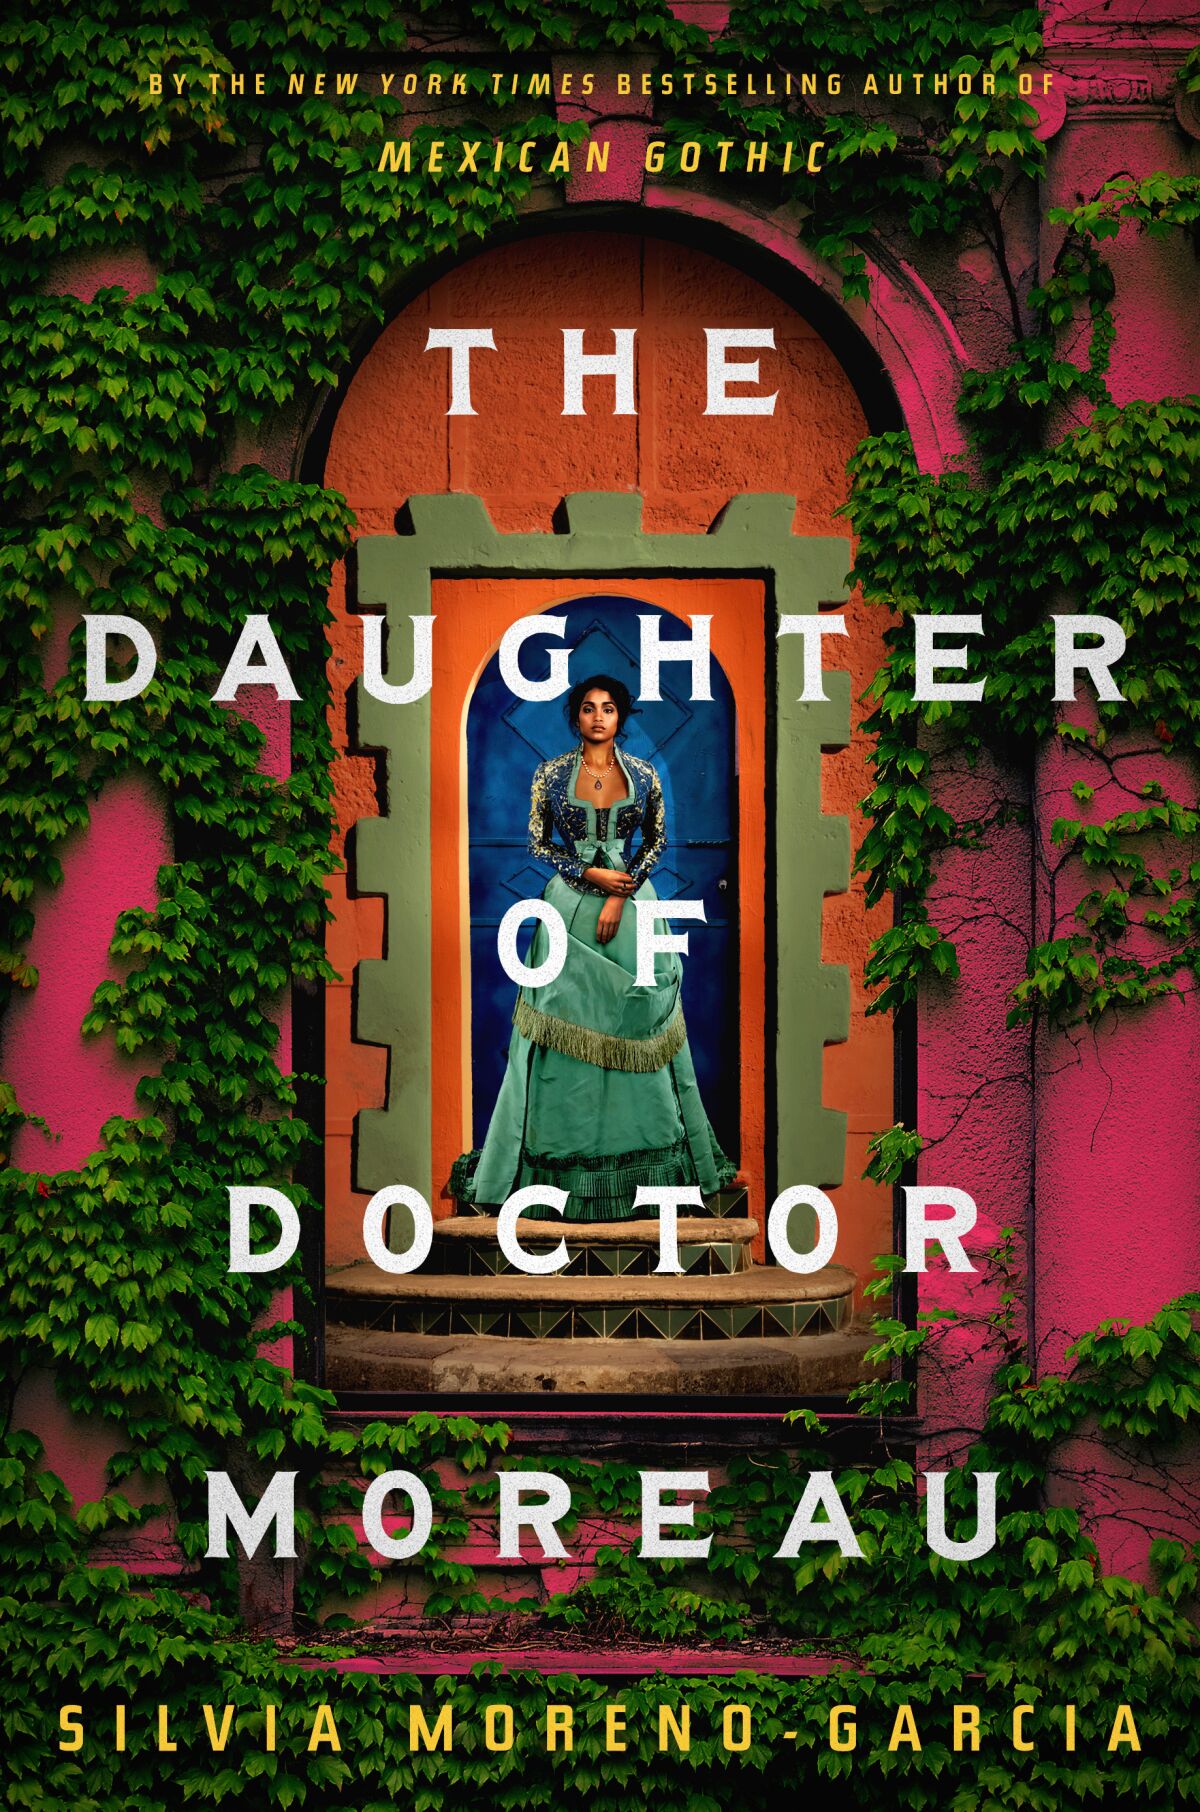 The book cover by Silvia Moreno-Garcia "Doctor Moreau's daughter"